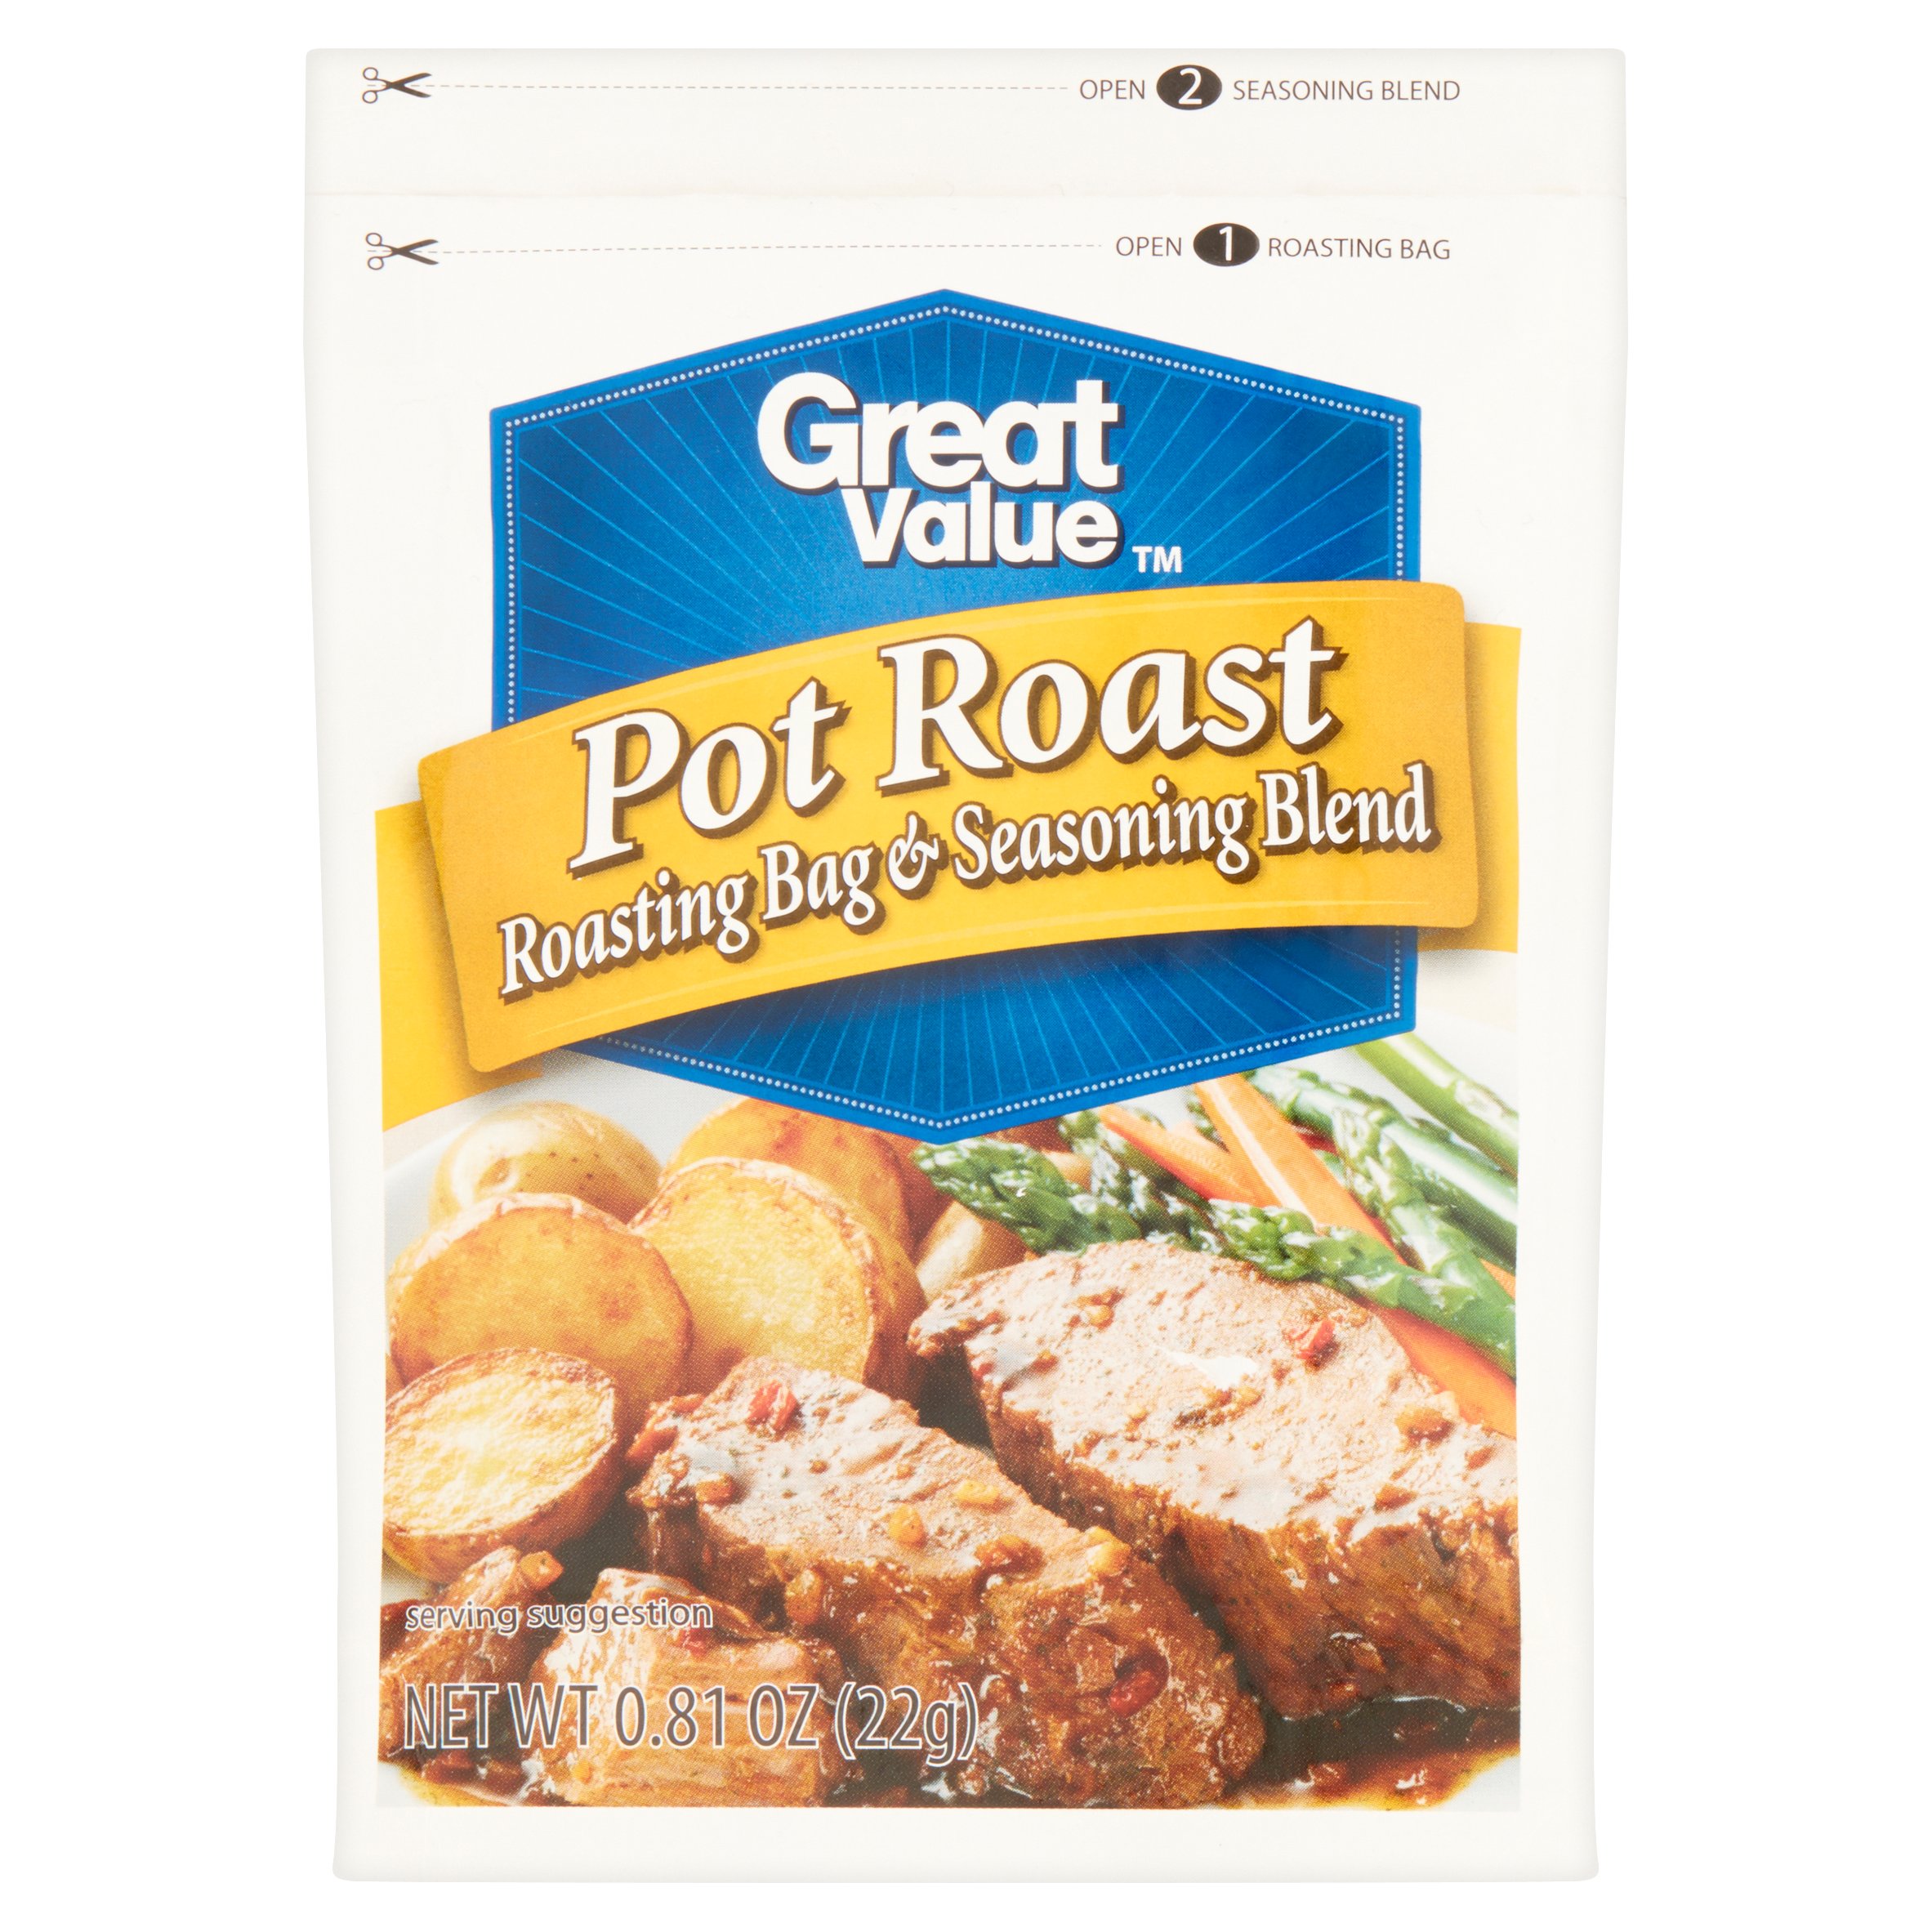 Great Value Pot Roast Roasting Bag & Seasoning Blend 0.81 oz